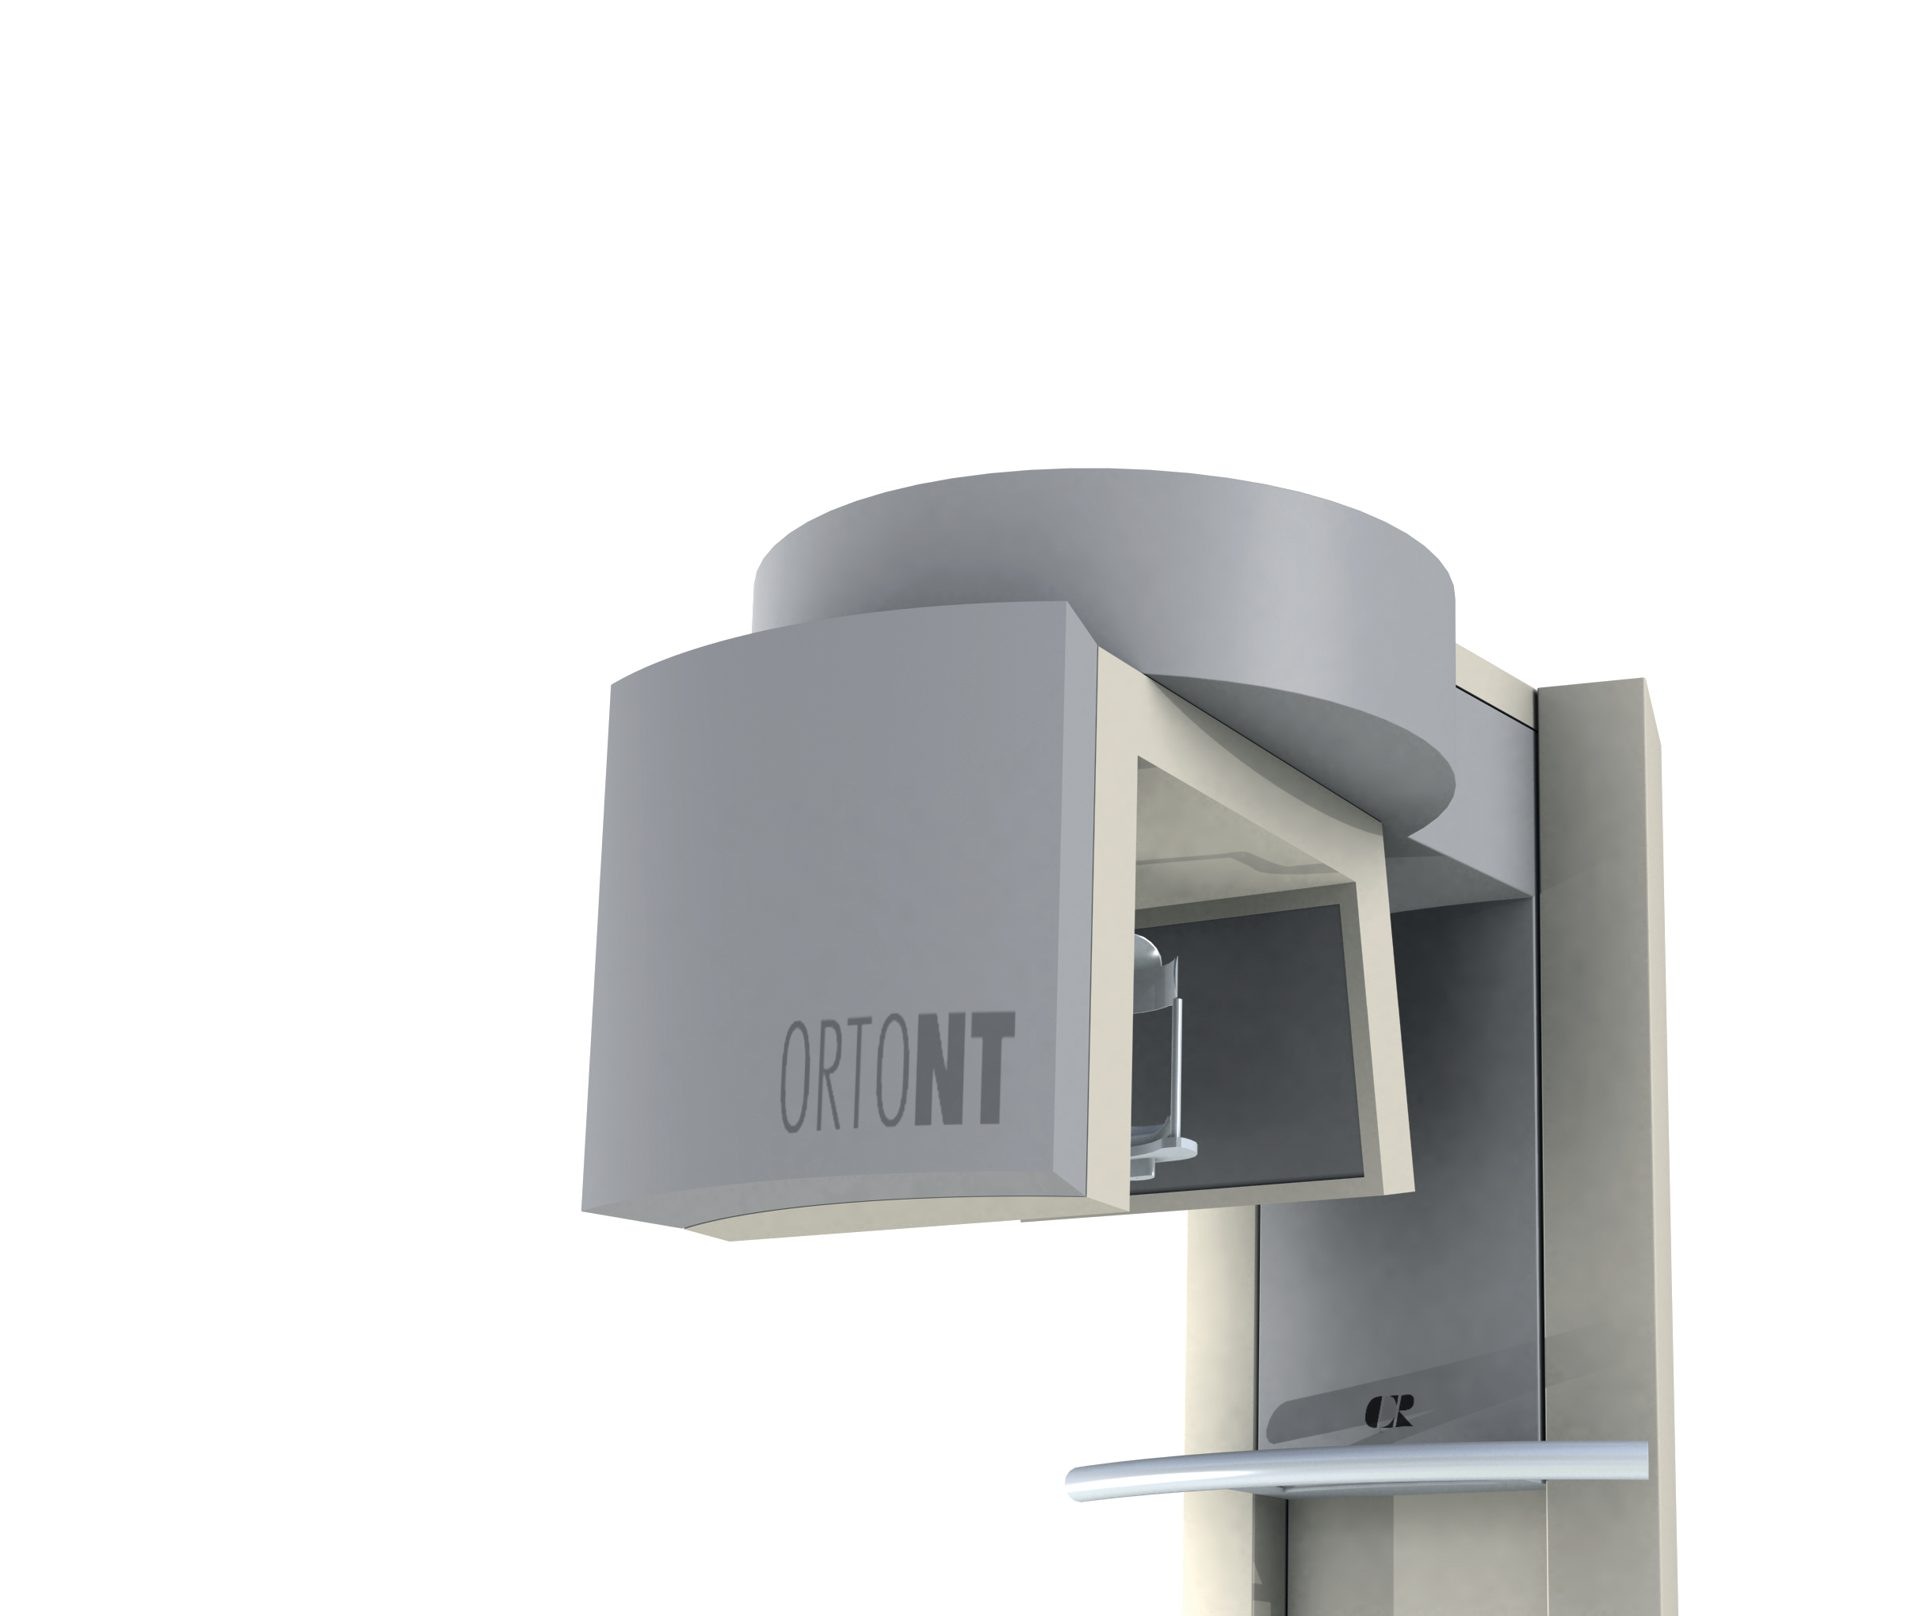 Design carrozzeria macchina radiografia panoramica dentale ORTO NT